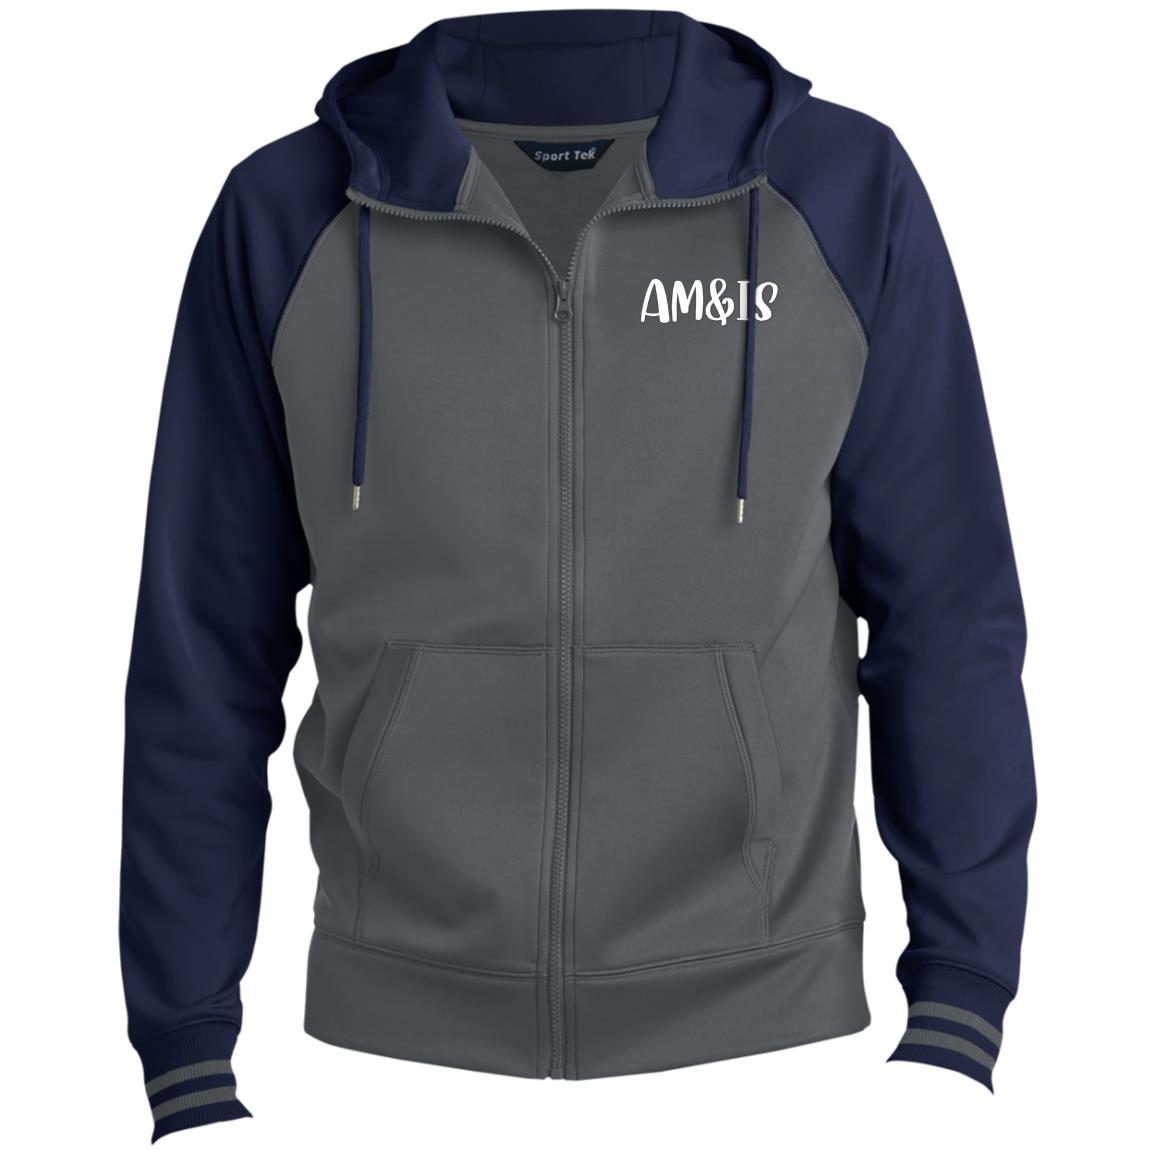 DARK SMOKE NAVY - AM&IS Activewear Men's Sport-Wick® Full-Zip Hooded Jacket - mens jacket at TFC&H Co.